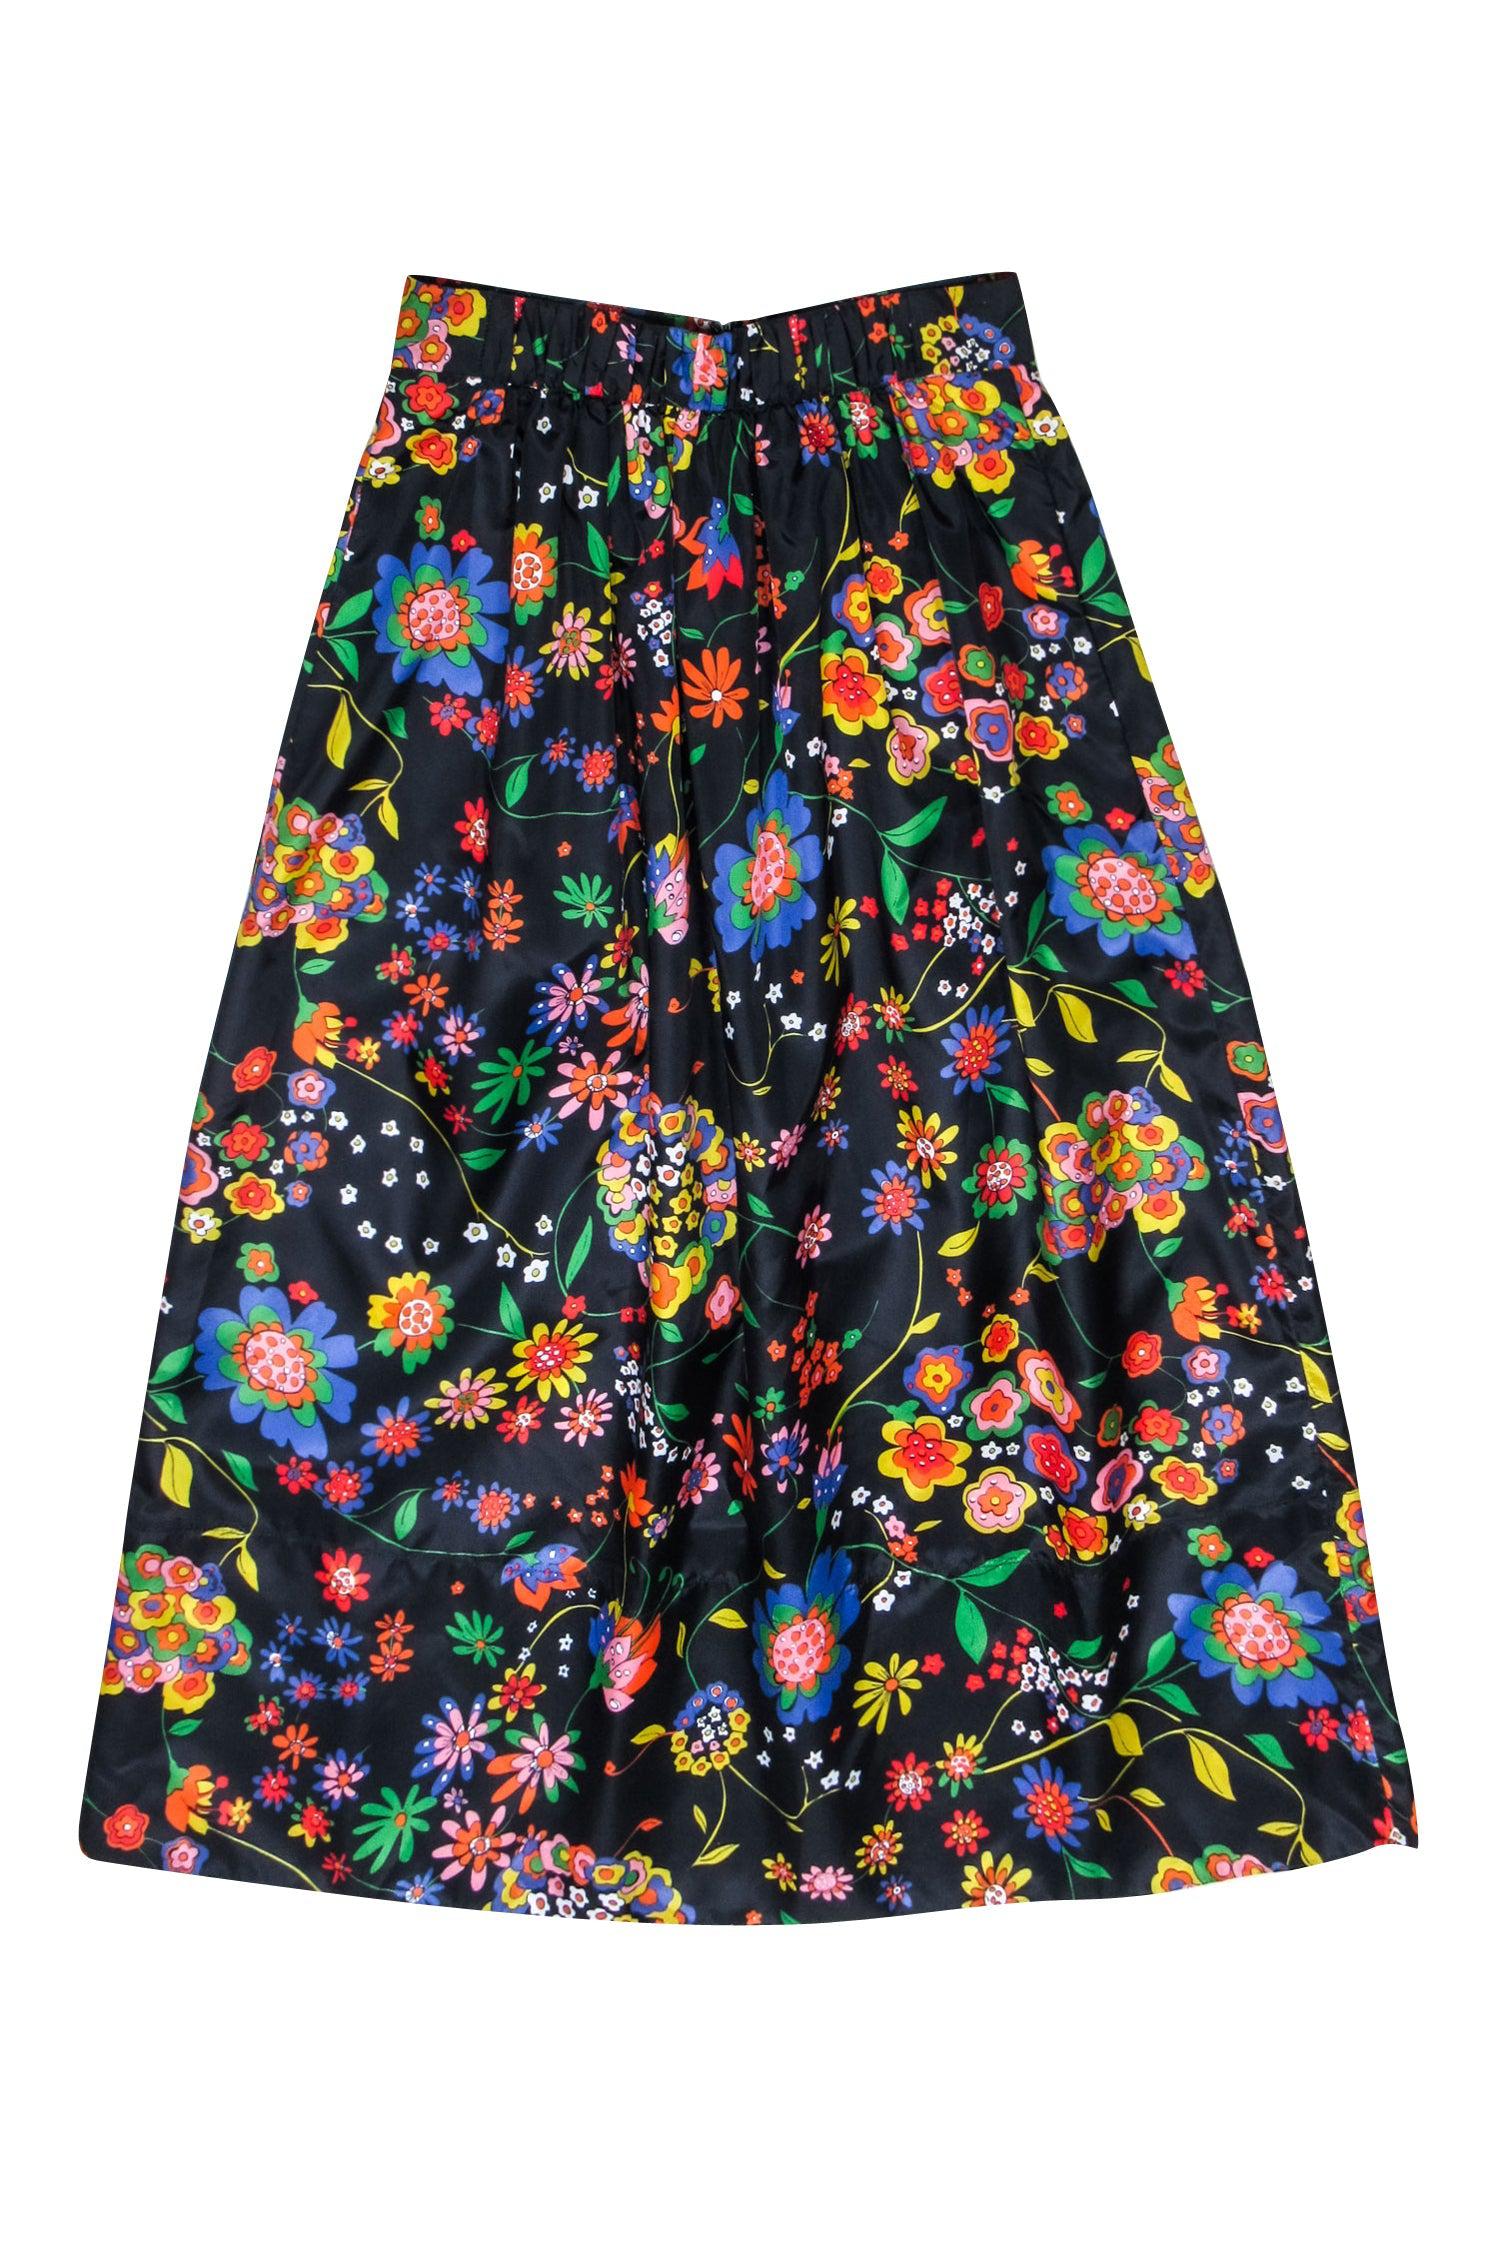 Tibi - Navy & Multi Color Printed Tech Floral Skirt Sz 4